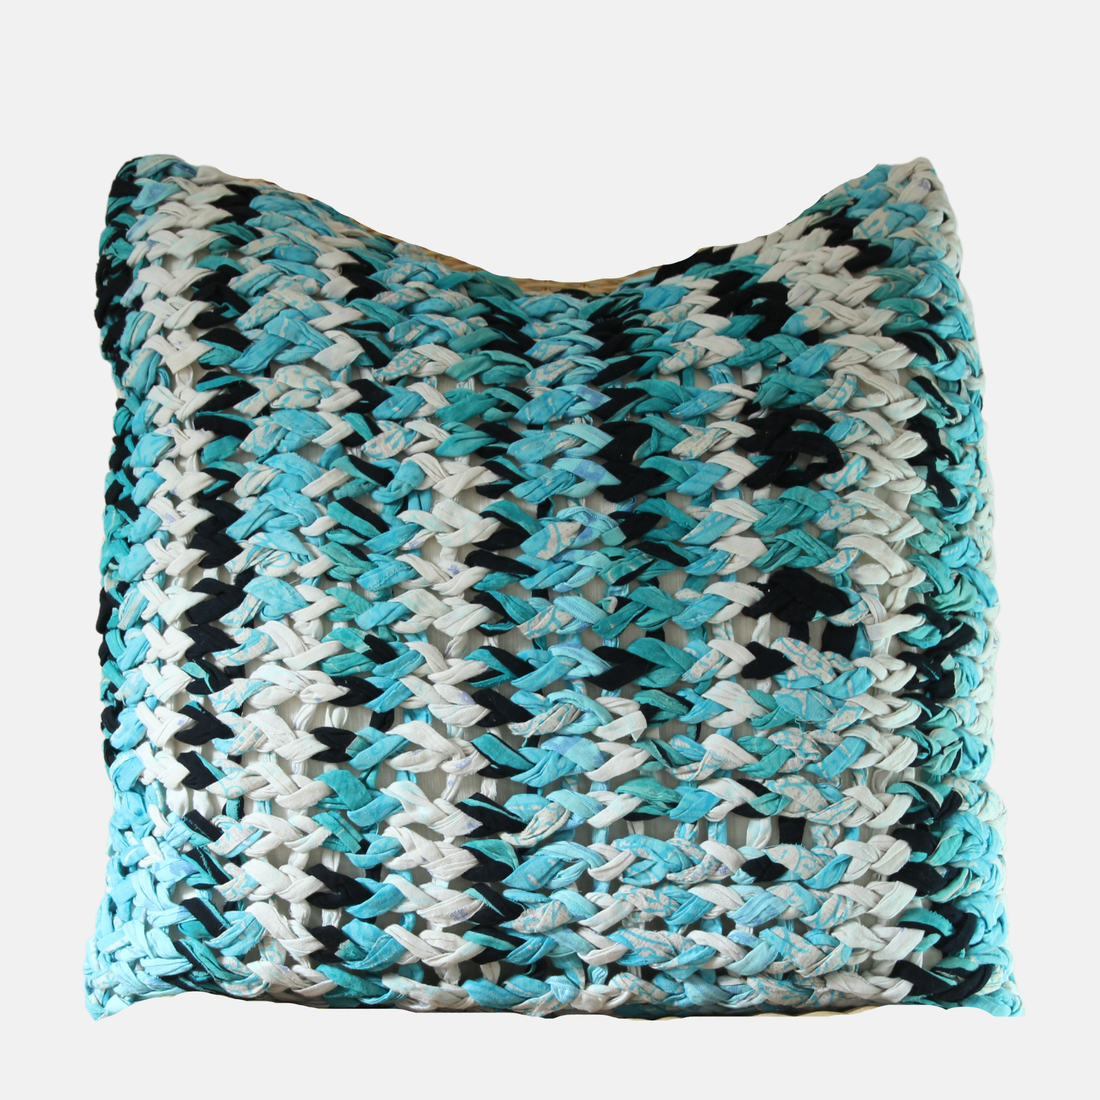 Cushions fair trade ethical sustainable fashion Chunky Knit Cushions conscious purchase Basha